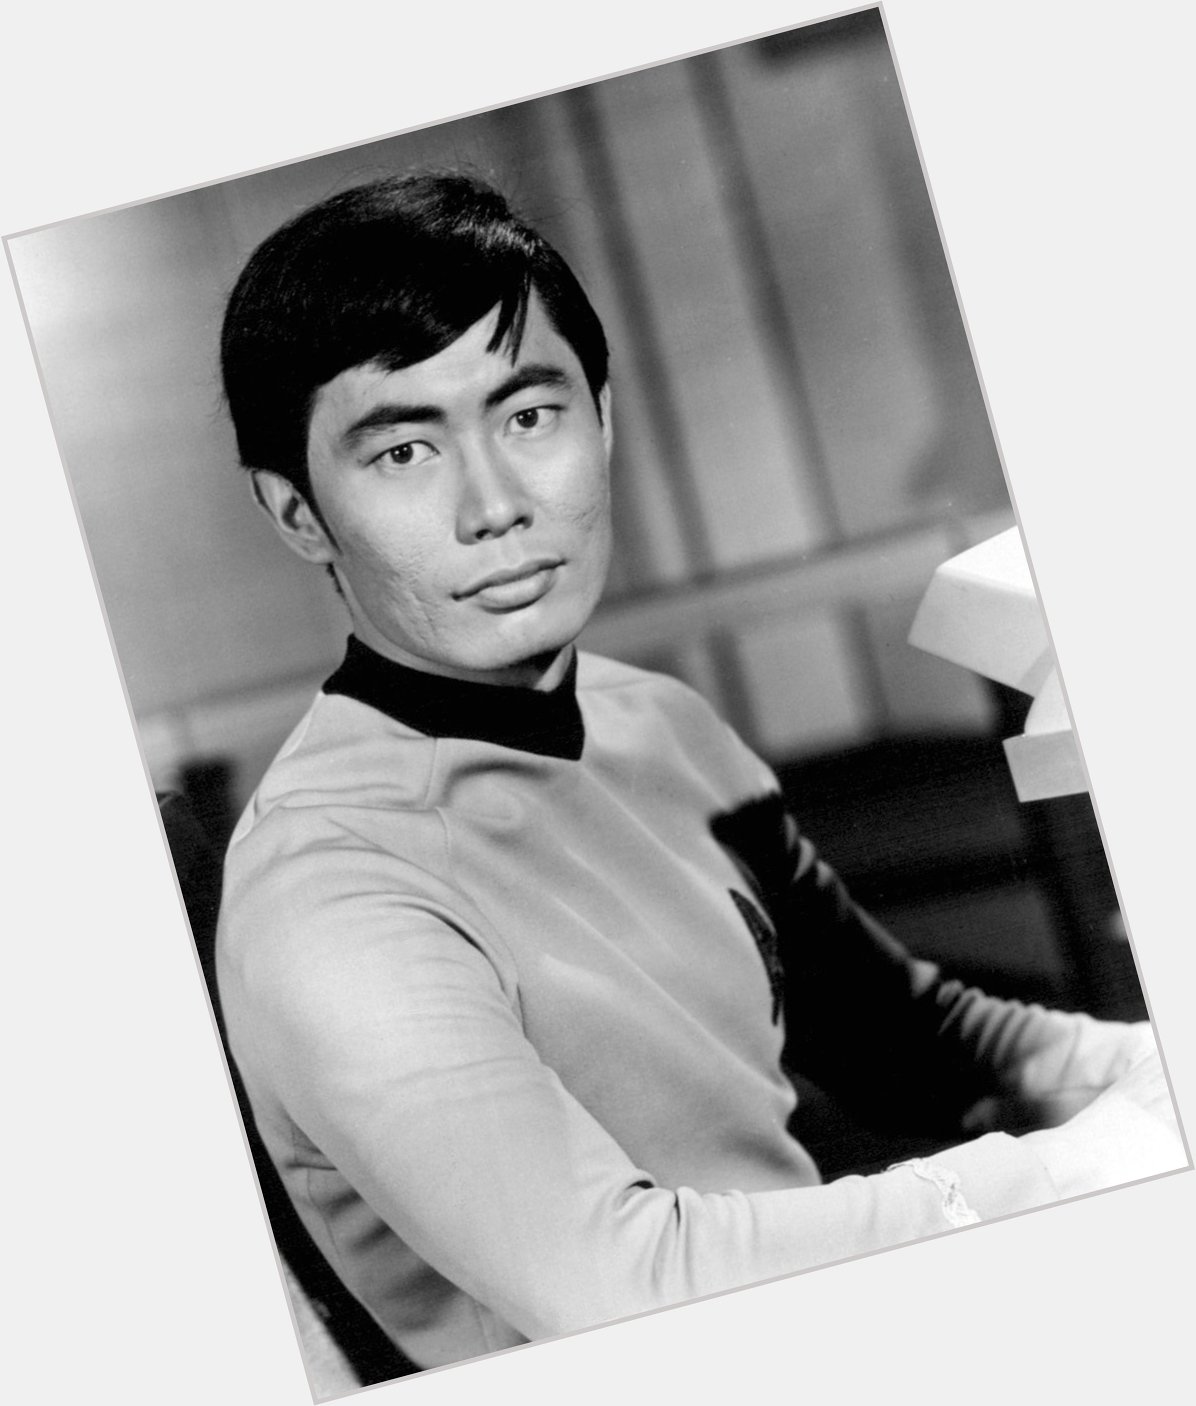 \"Standard orbit, Mr. Sulu.\"
Happy 85th Birthday to George Takei. 